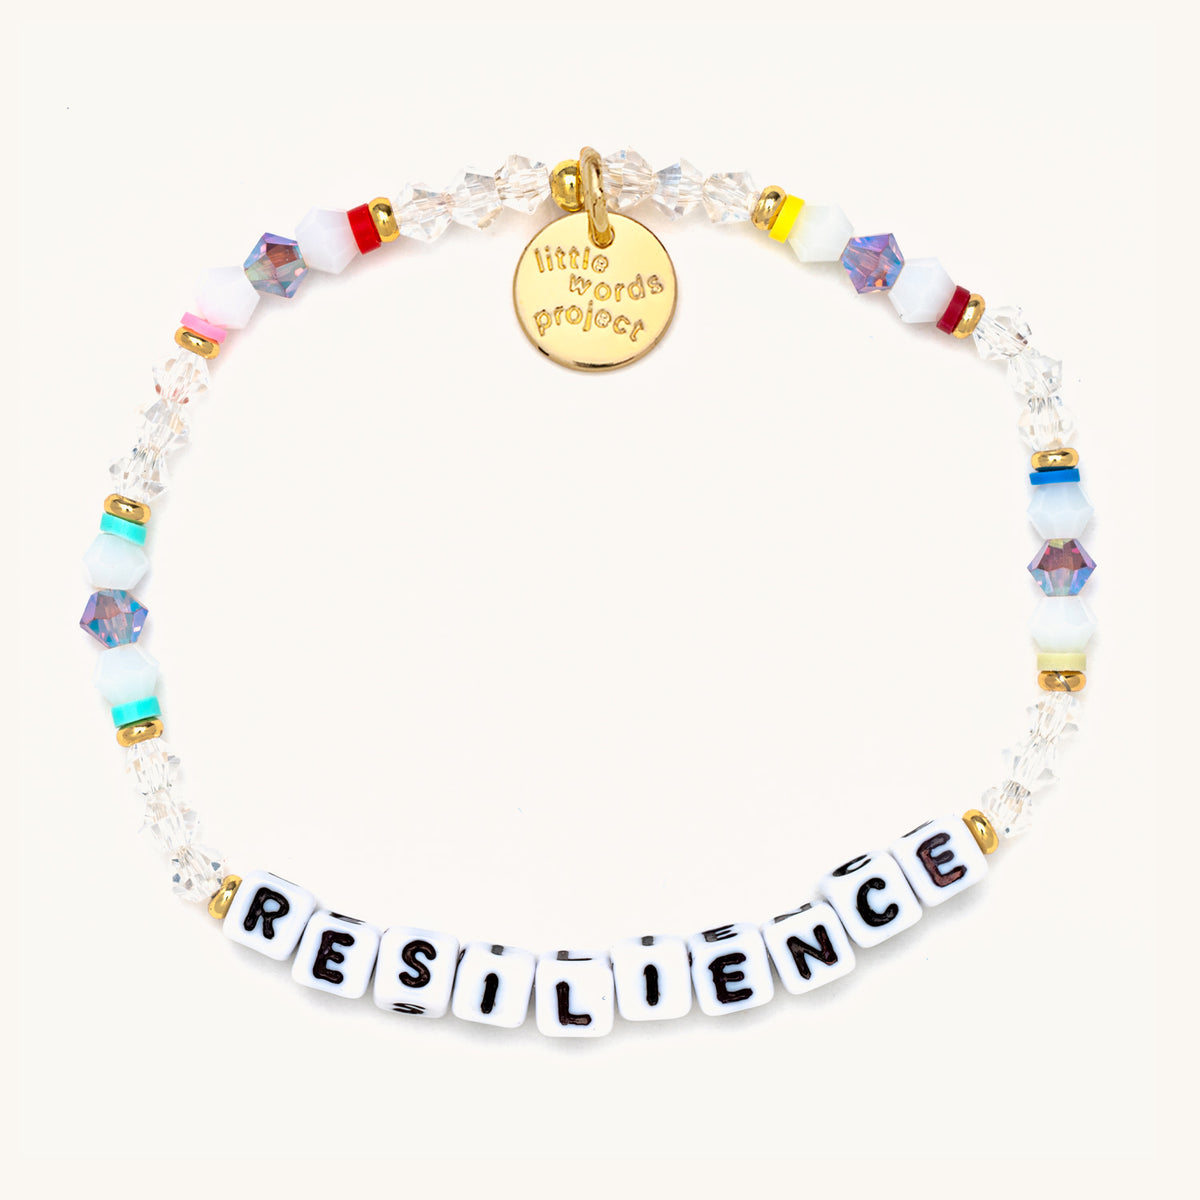 'Resilience' Beaded Bracelet - Little Words Project